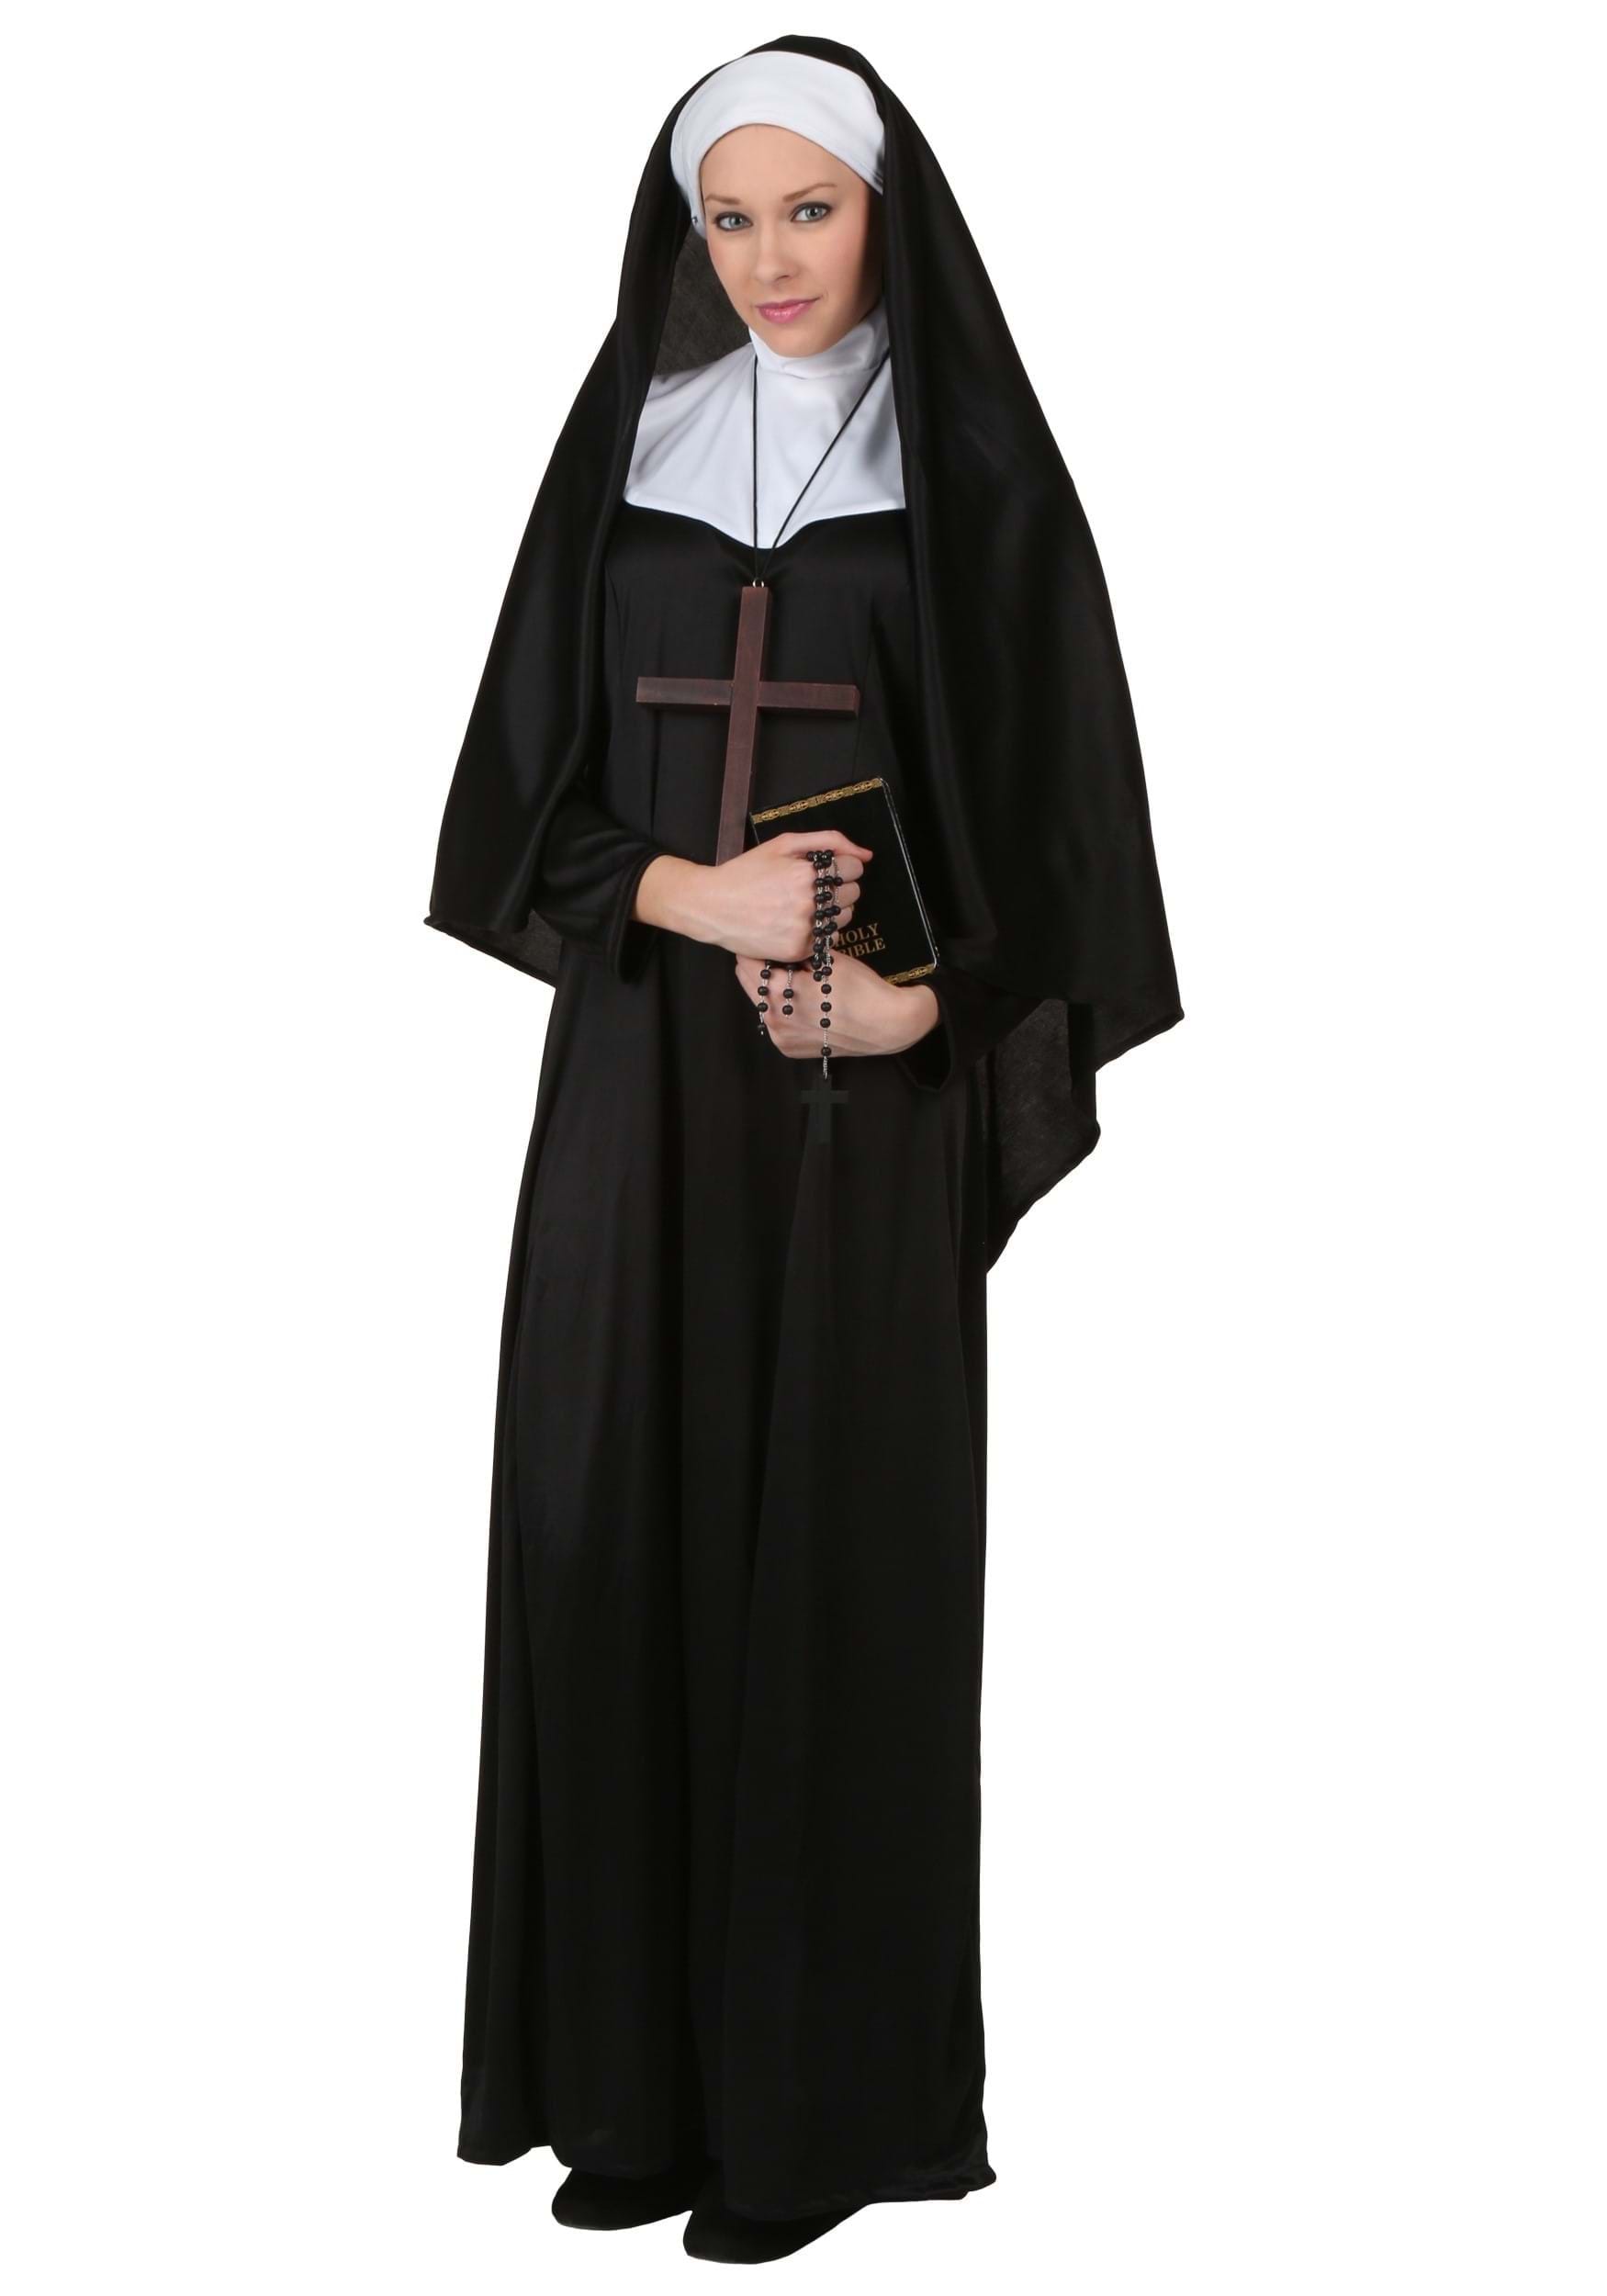 Photos - Fancy Dress FUN Costumes Traditional Women's Nun Costume Black/White FUN2921AD